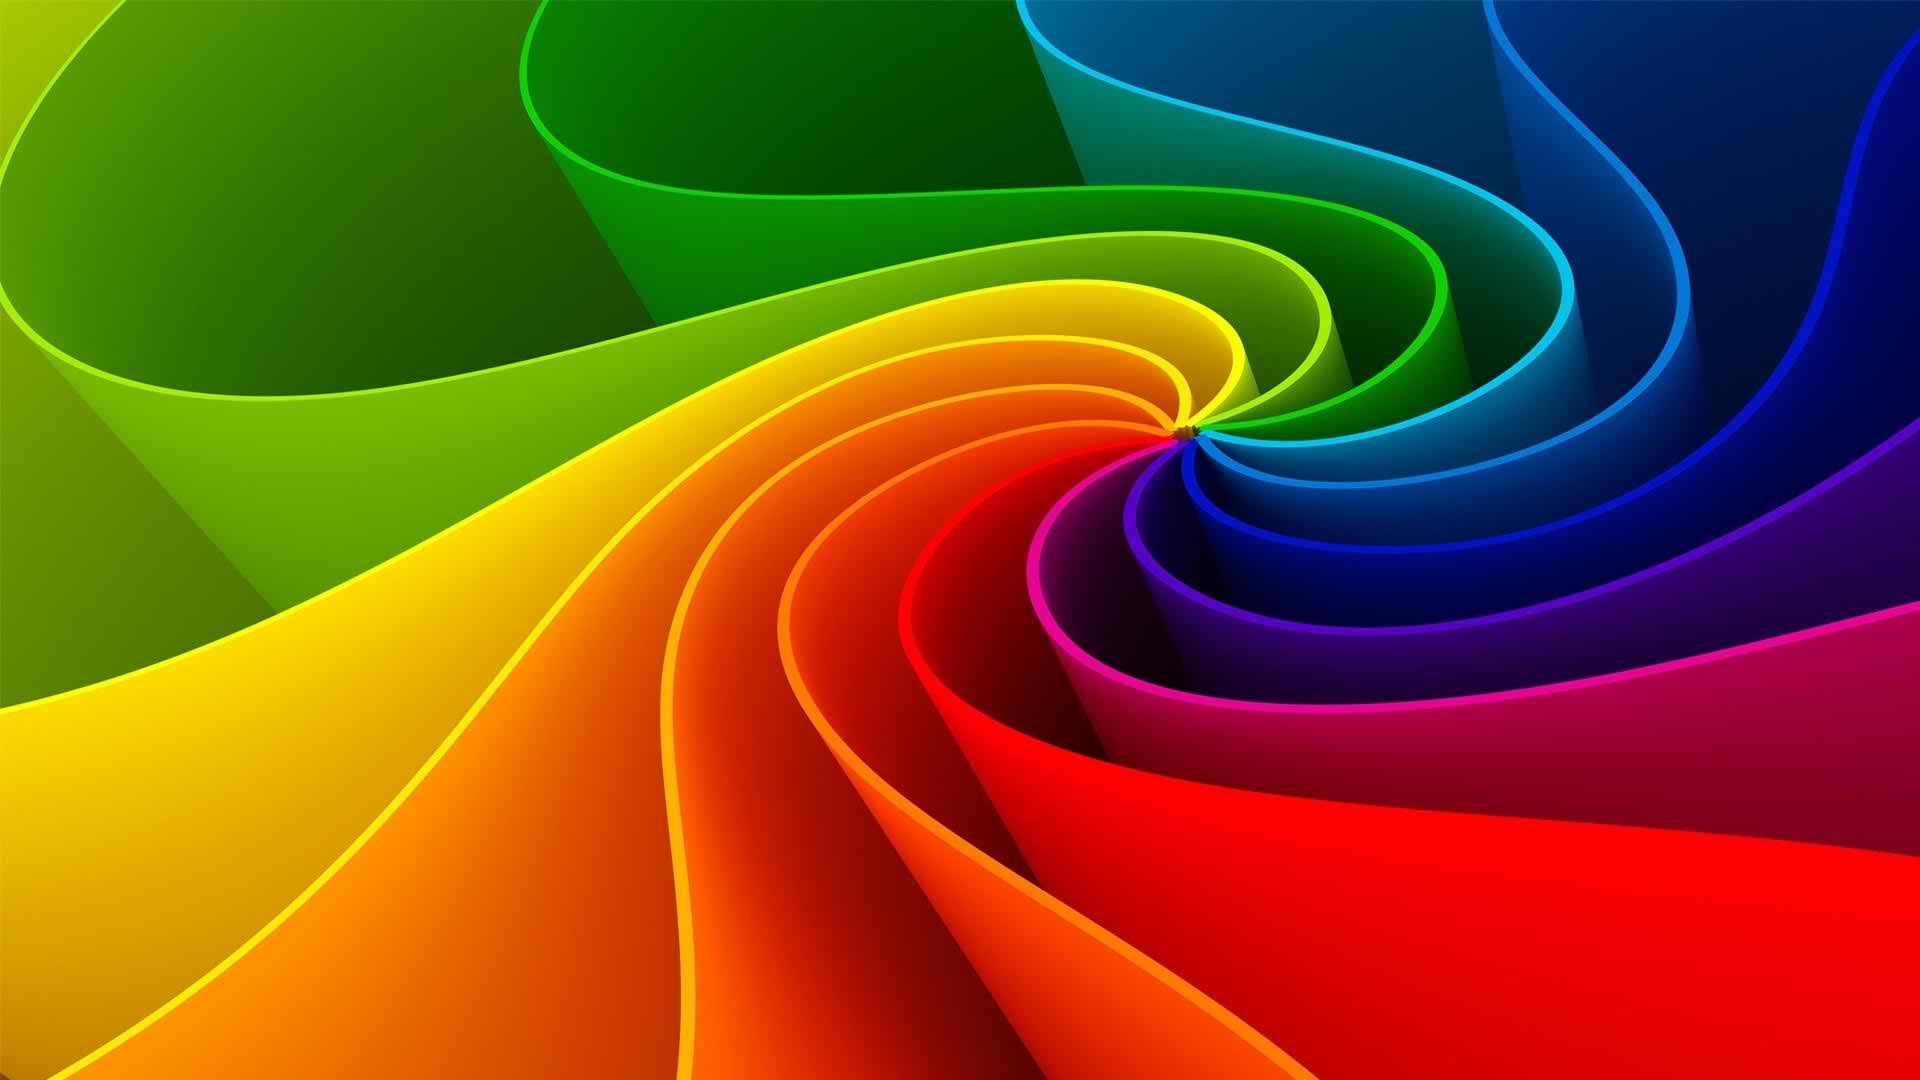 Rainbow Wallpaper HD